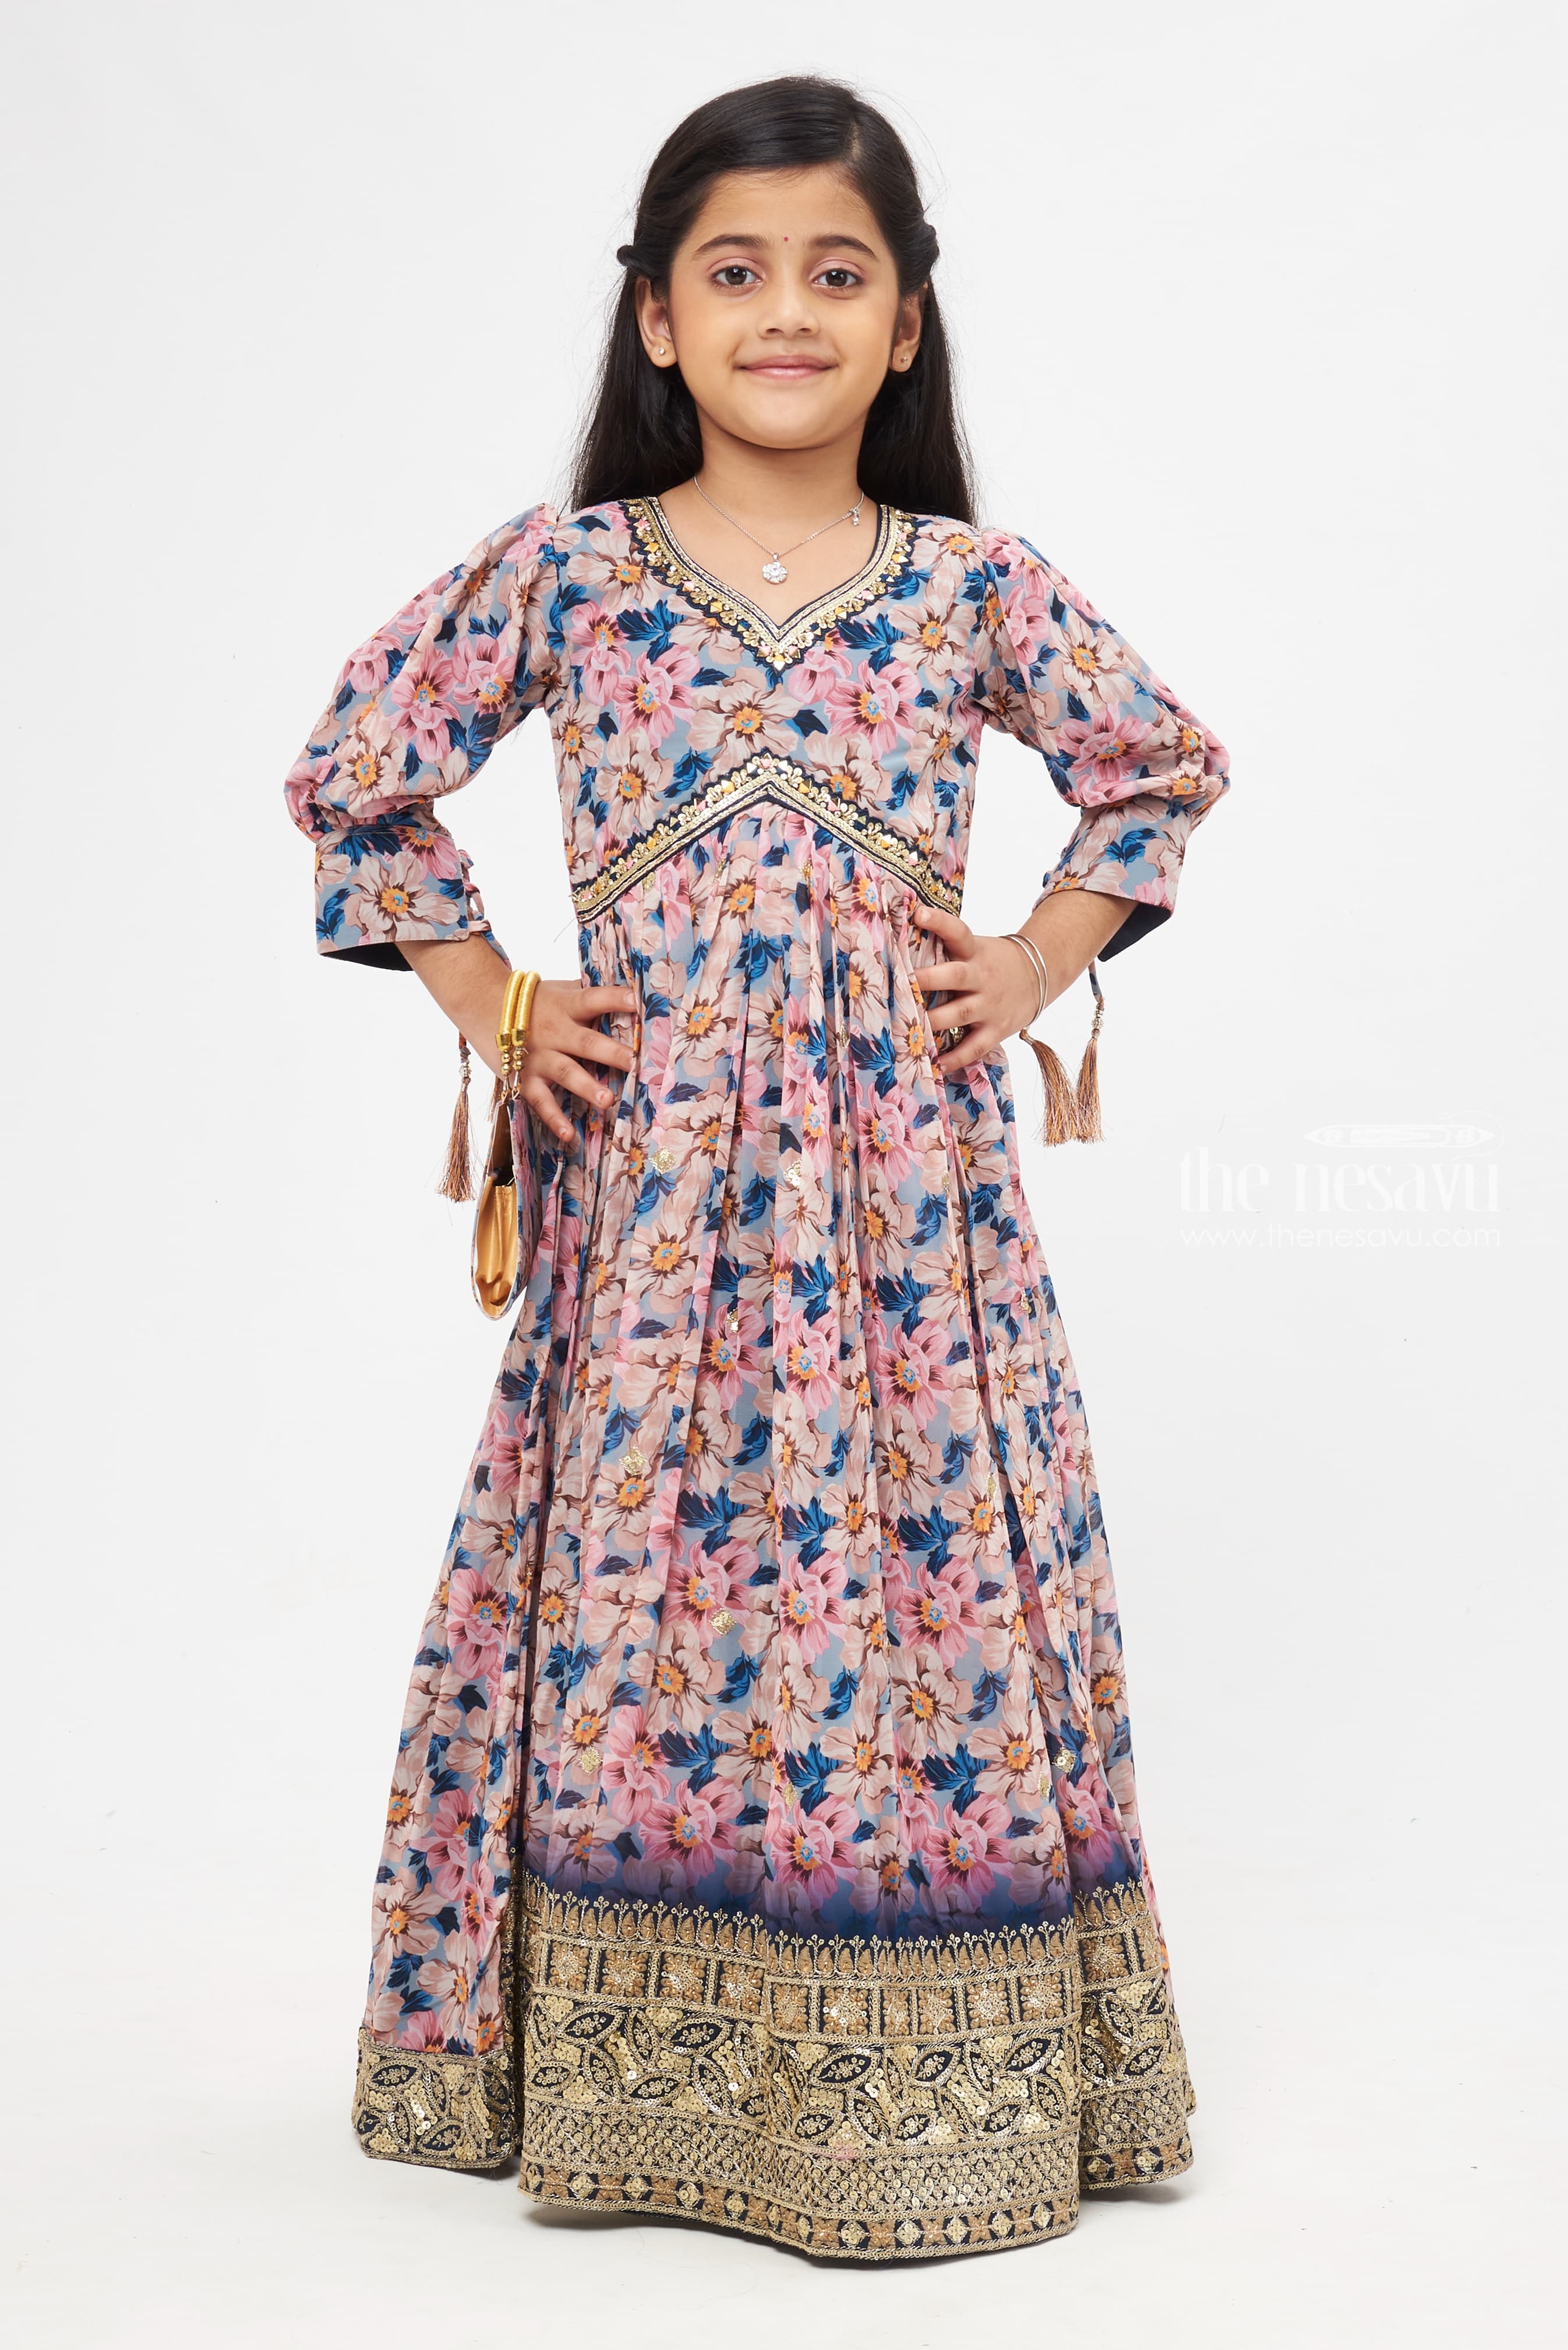 Maroon Anarkali Dress for Girls - A.T.U.N. | Wedding Dress for Kids